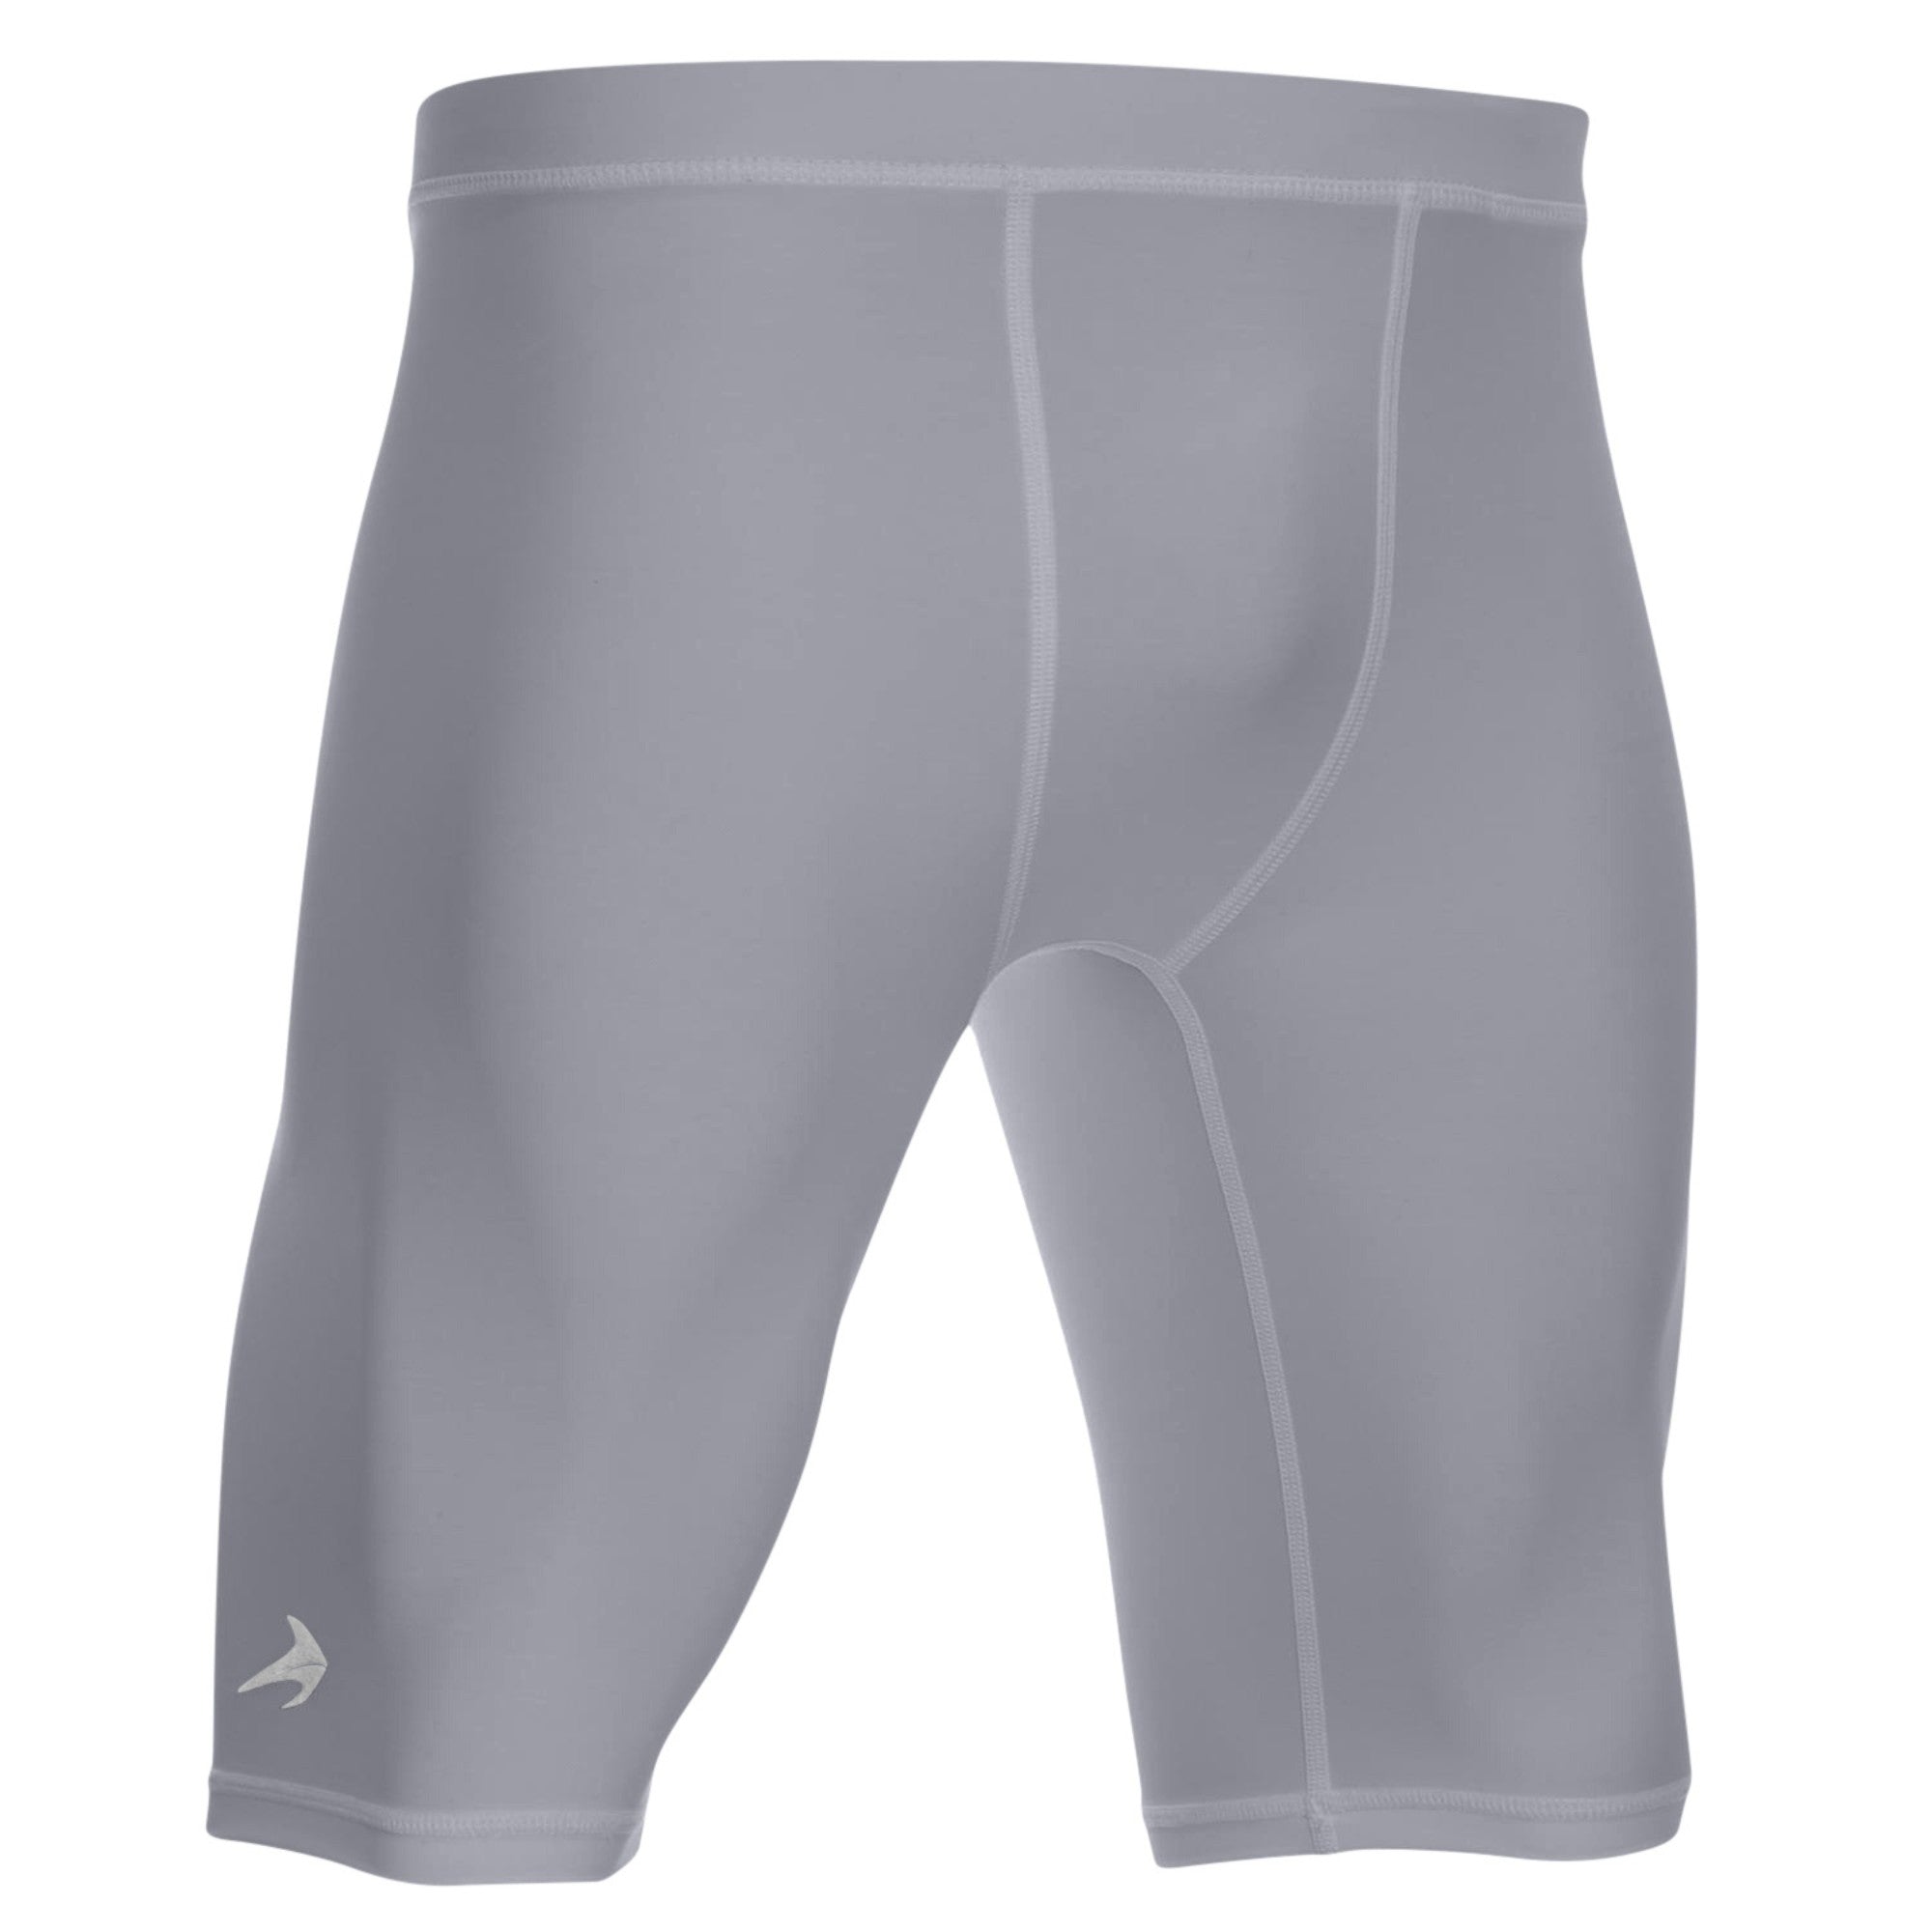 Men's 9" Compression Shorts - Gray